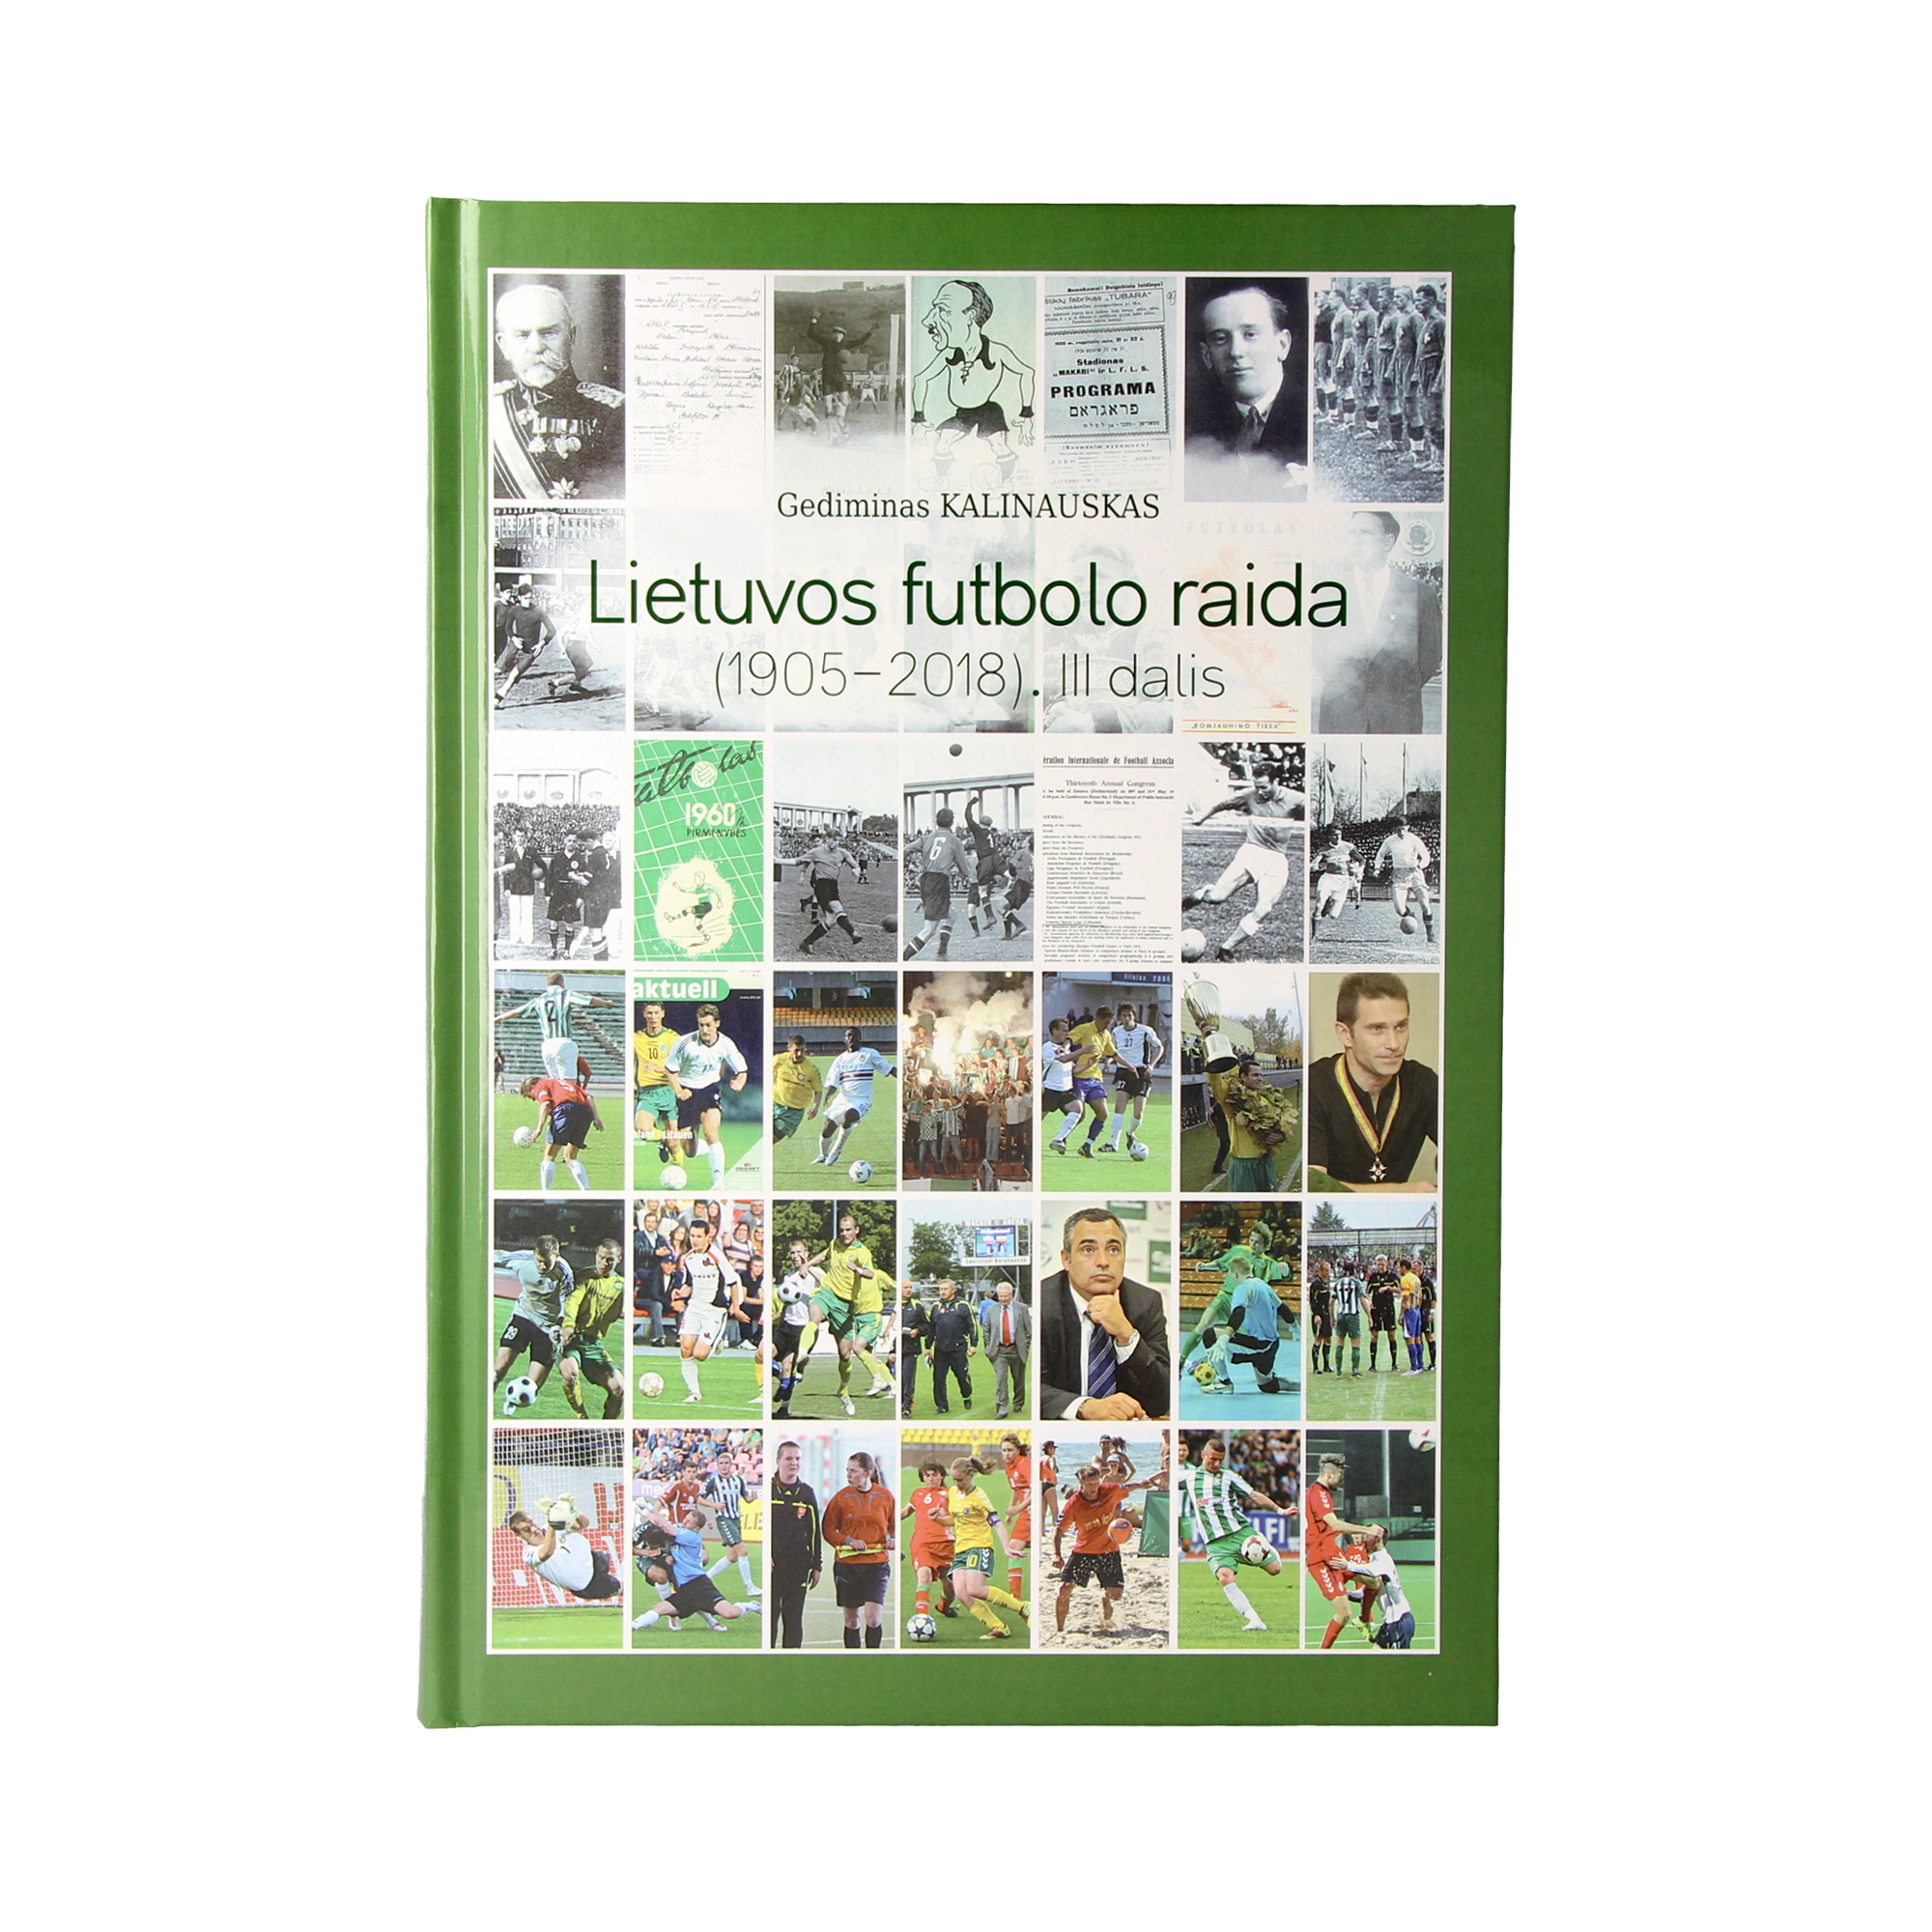 KNYGA “LIETUVOS FUTBOLO RAIDA (1905 – 2018)” III DALIS